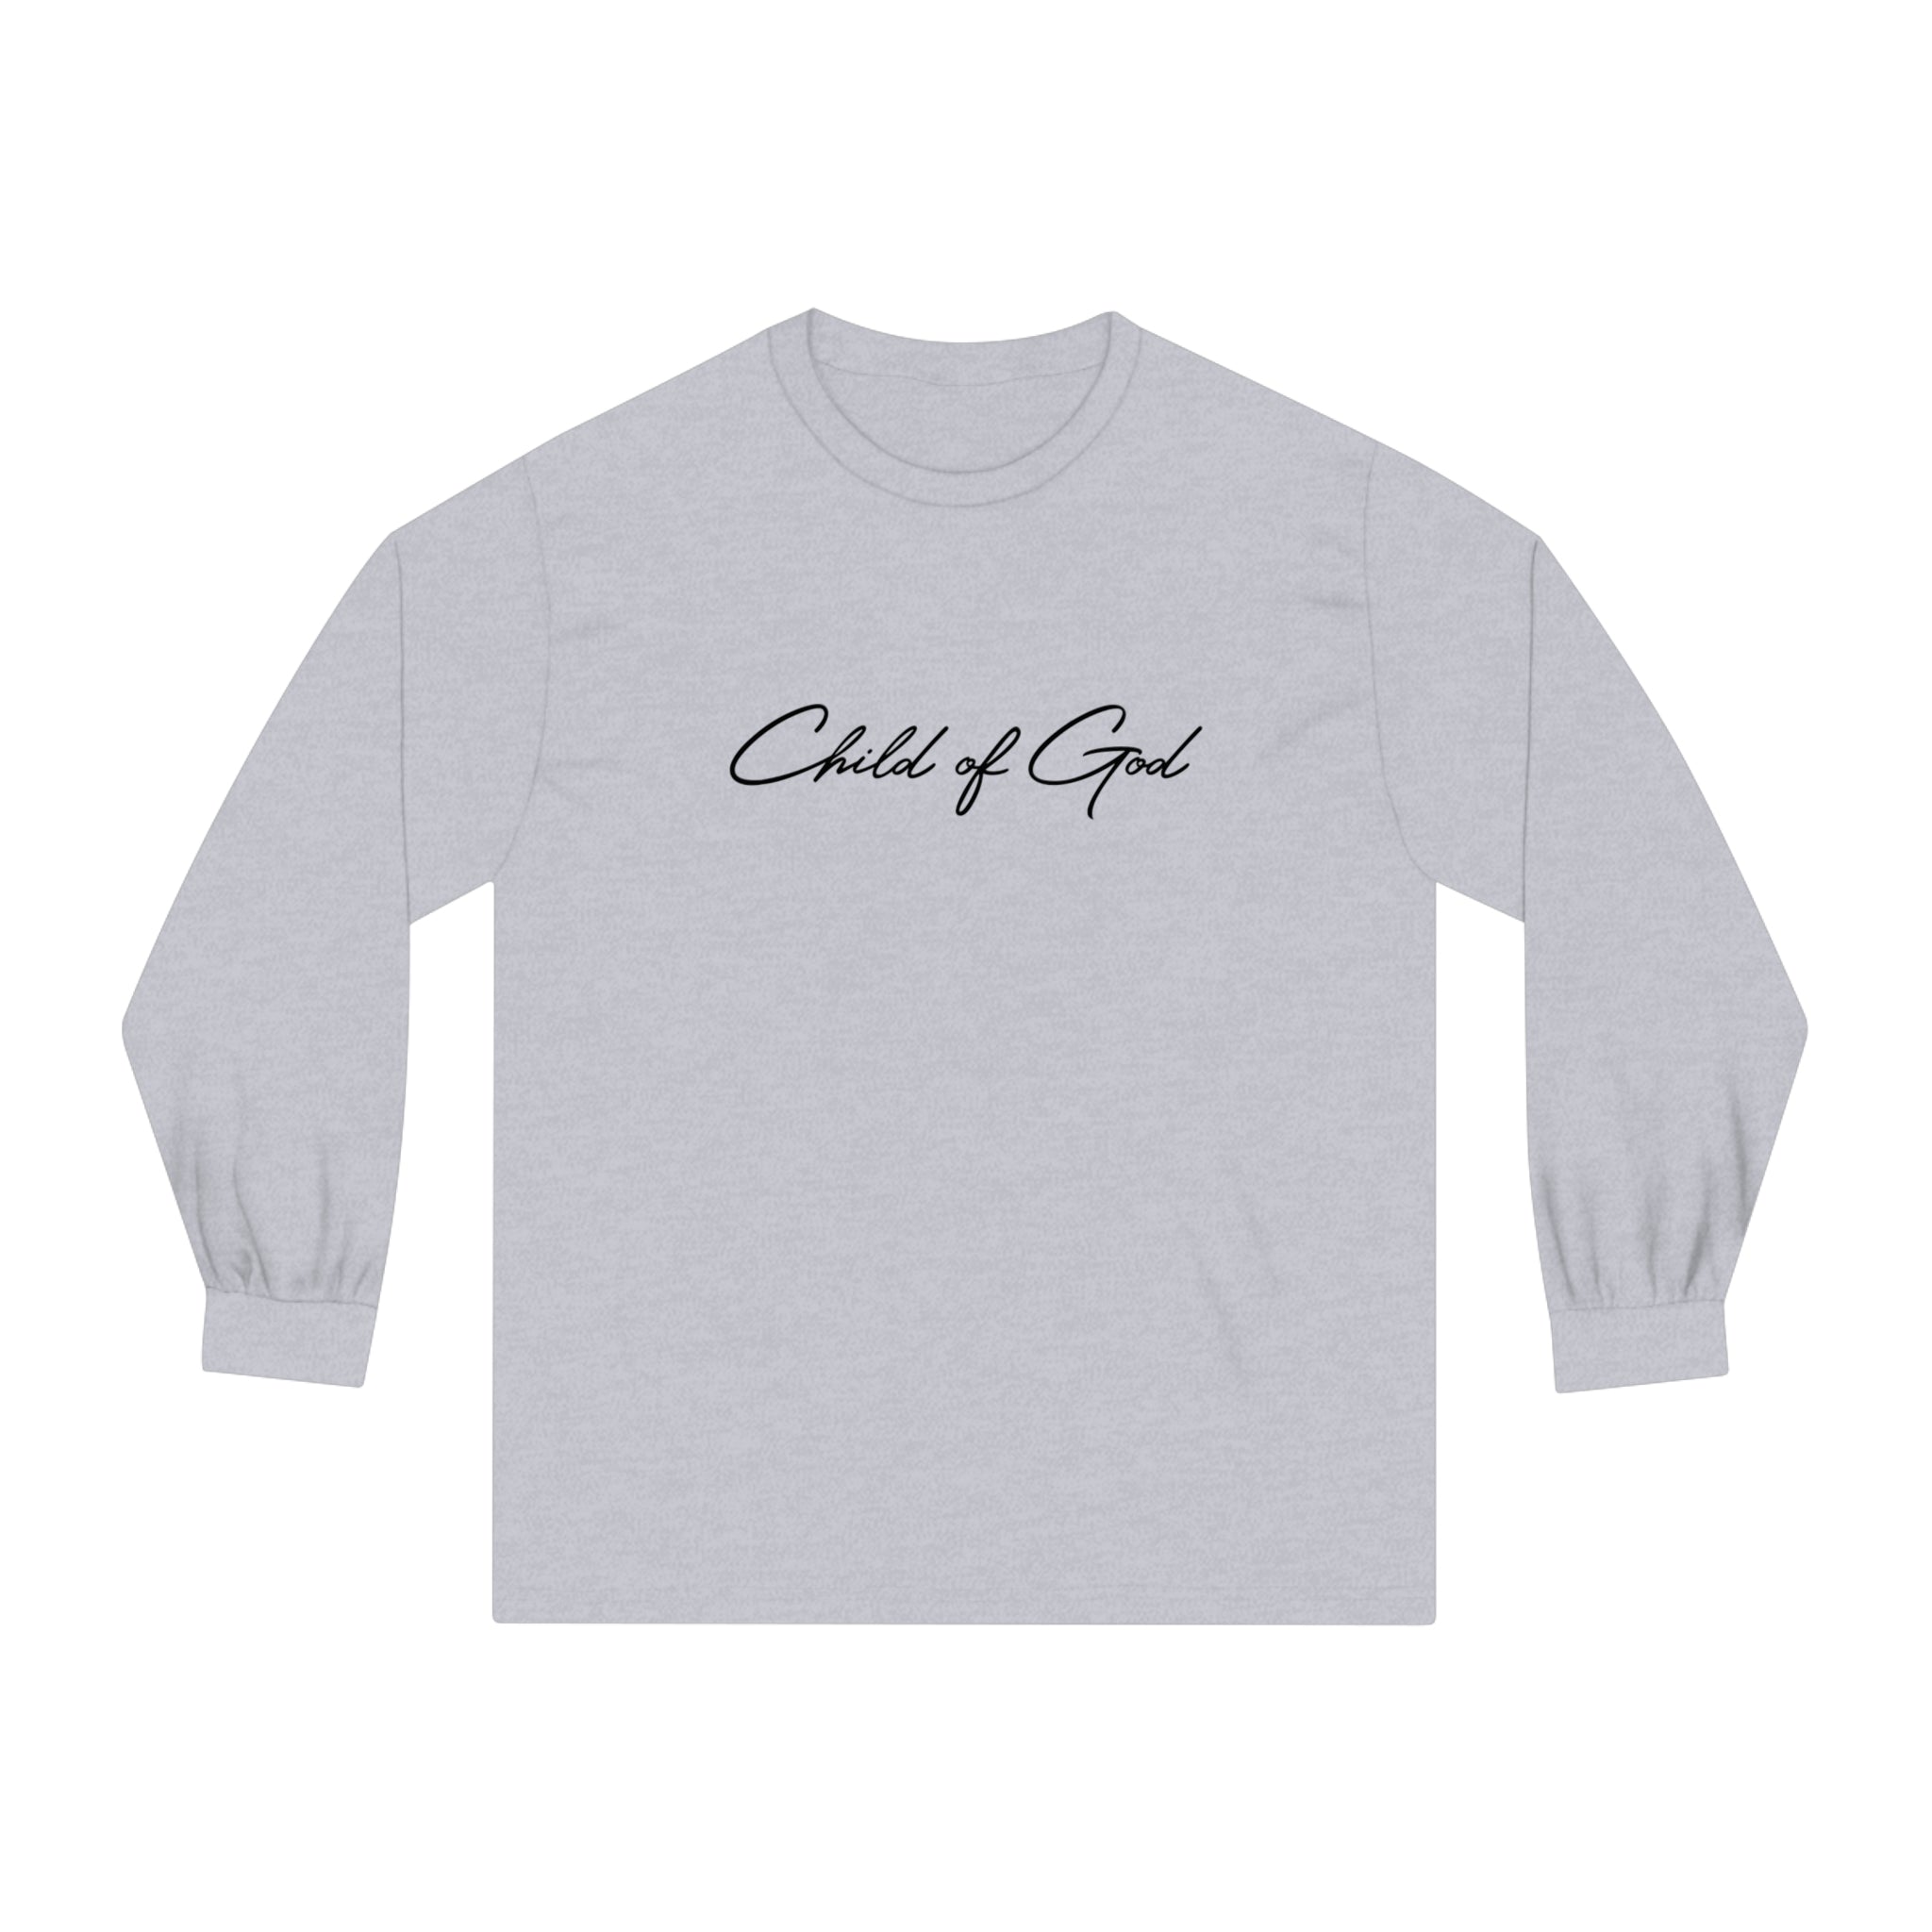 Classic Design Unisex Long Sleeve T-Shirt - Child of God Project